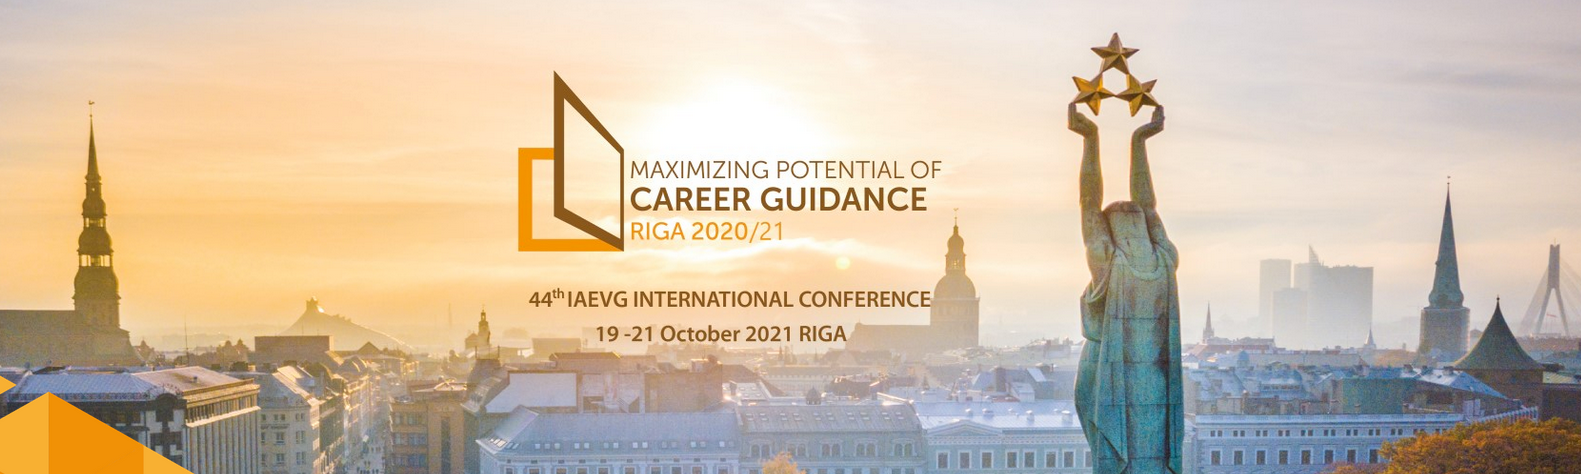 Logo IAEVG Conference